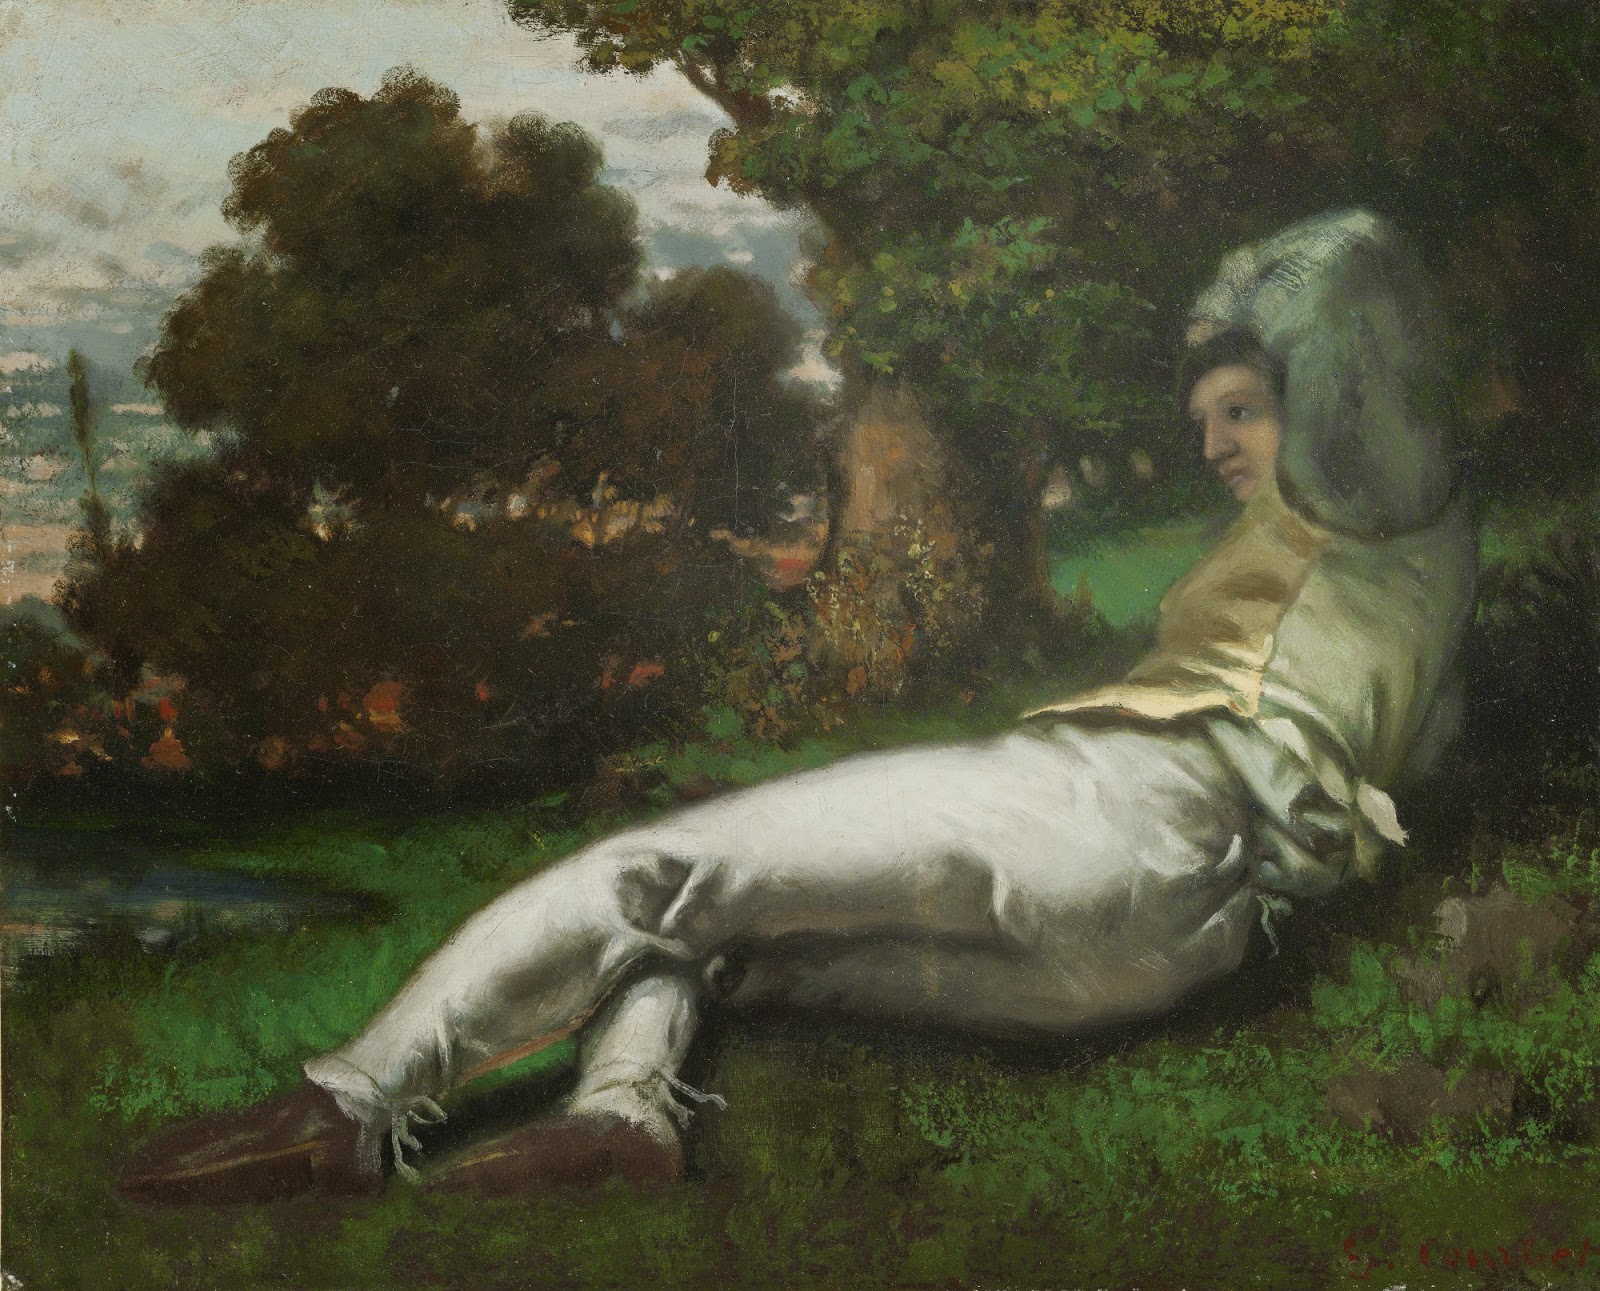 Gustave+Courbet-1819-1877 (63).jpg